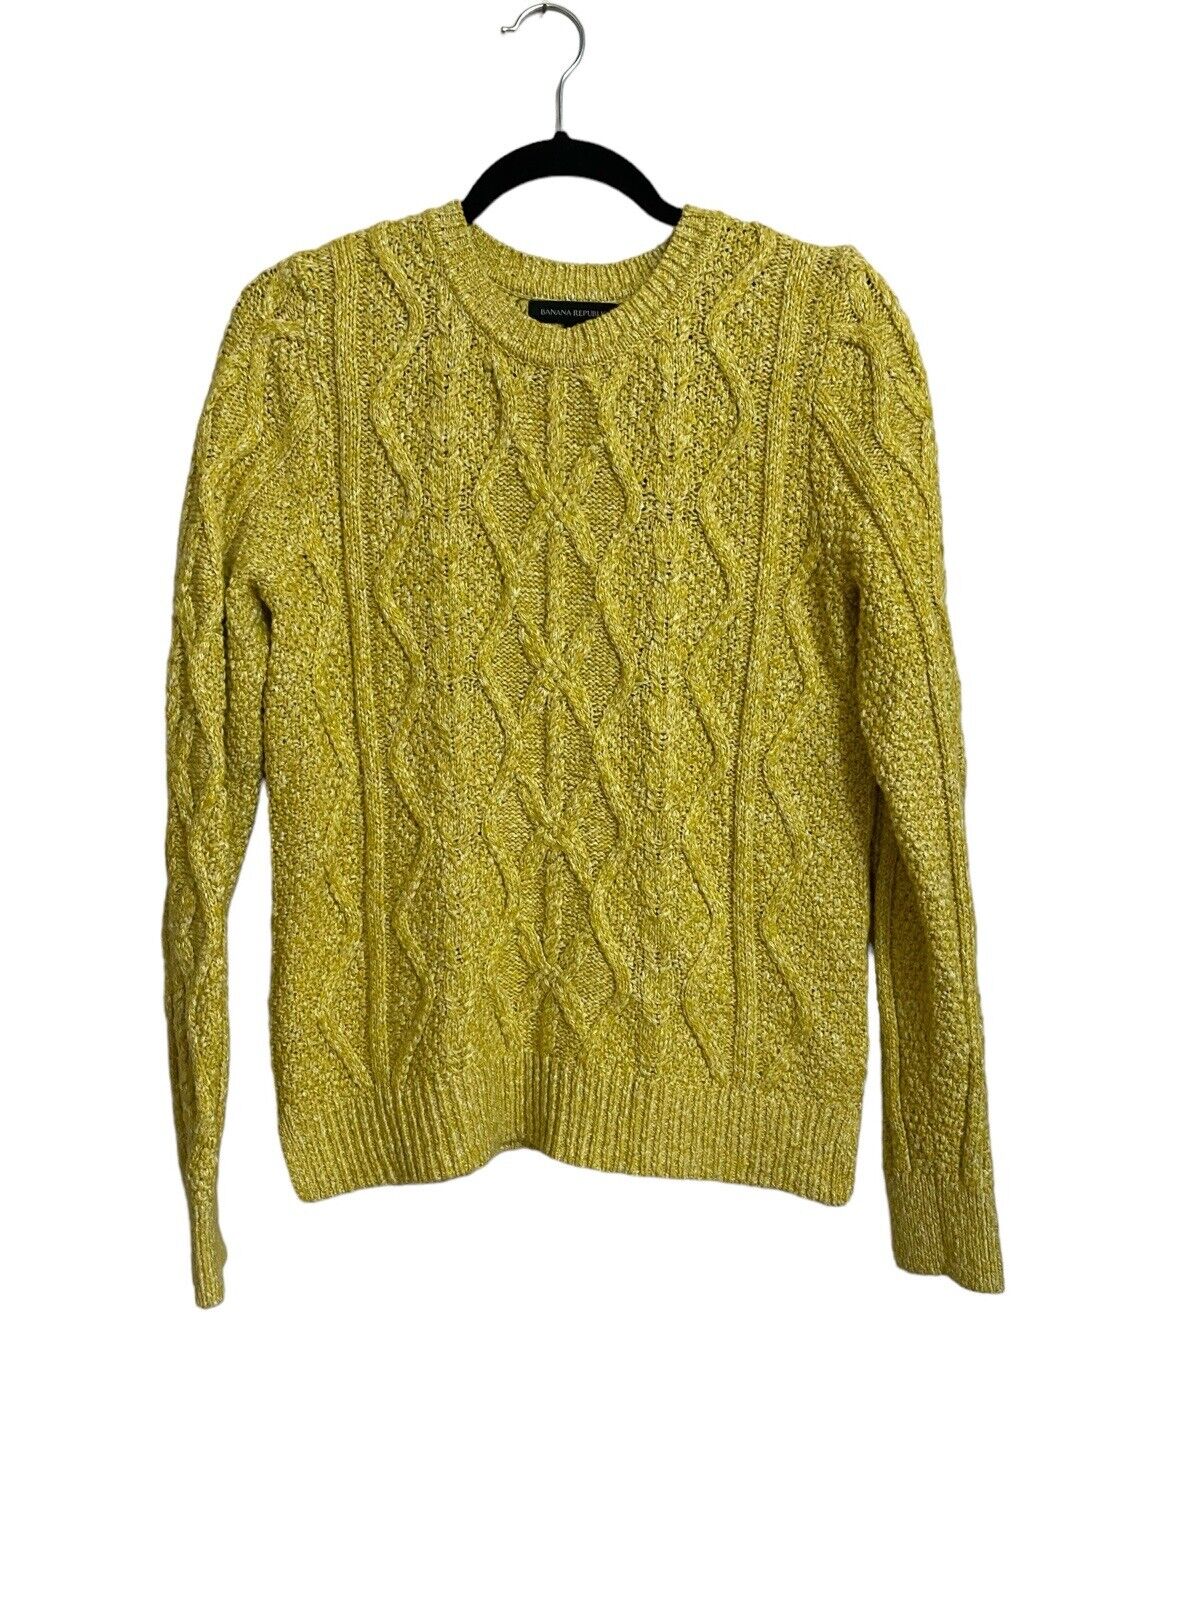 Banana Republic Cable Knit Sweater Size Medium - image 1